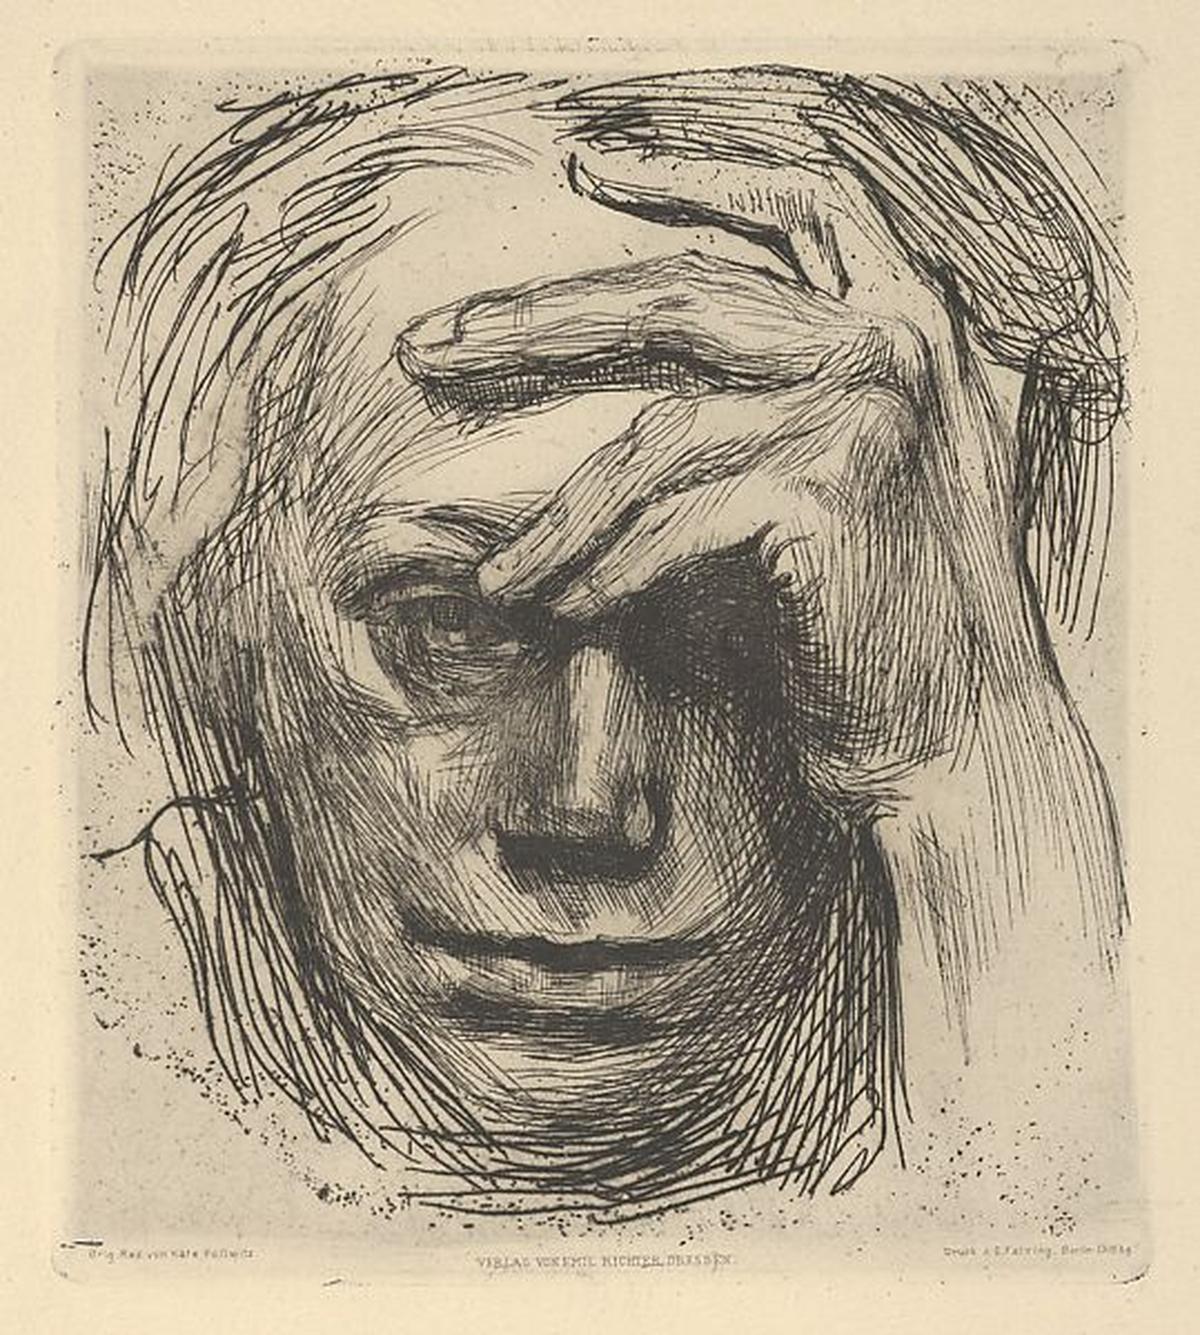 Self-Portrait with Hand on the Forehead by Käthe Kollwitz, 1910